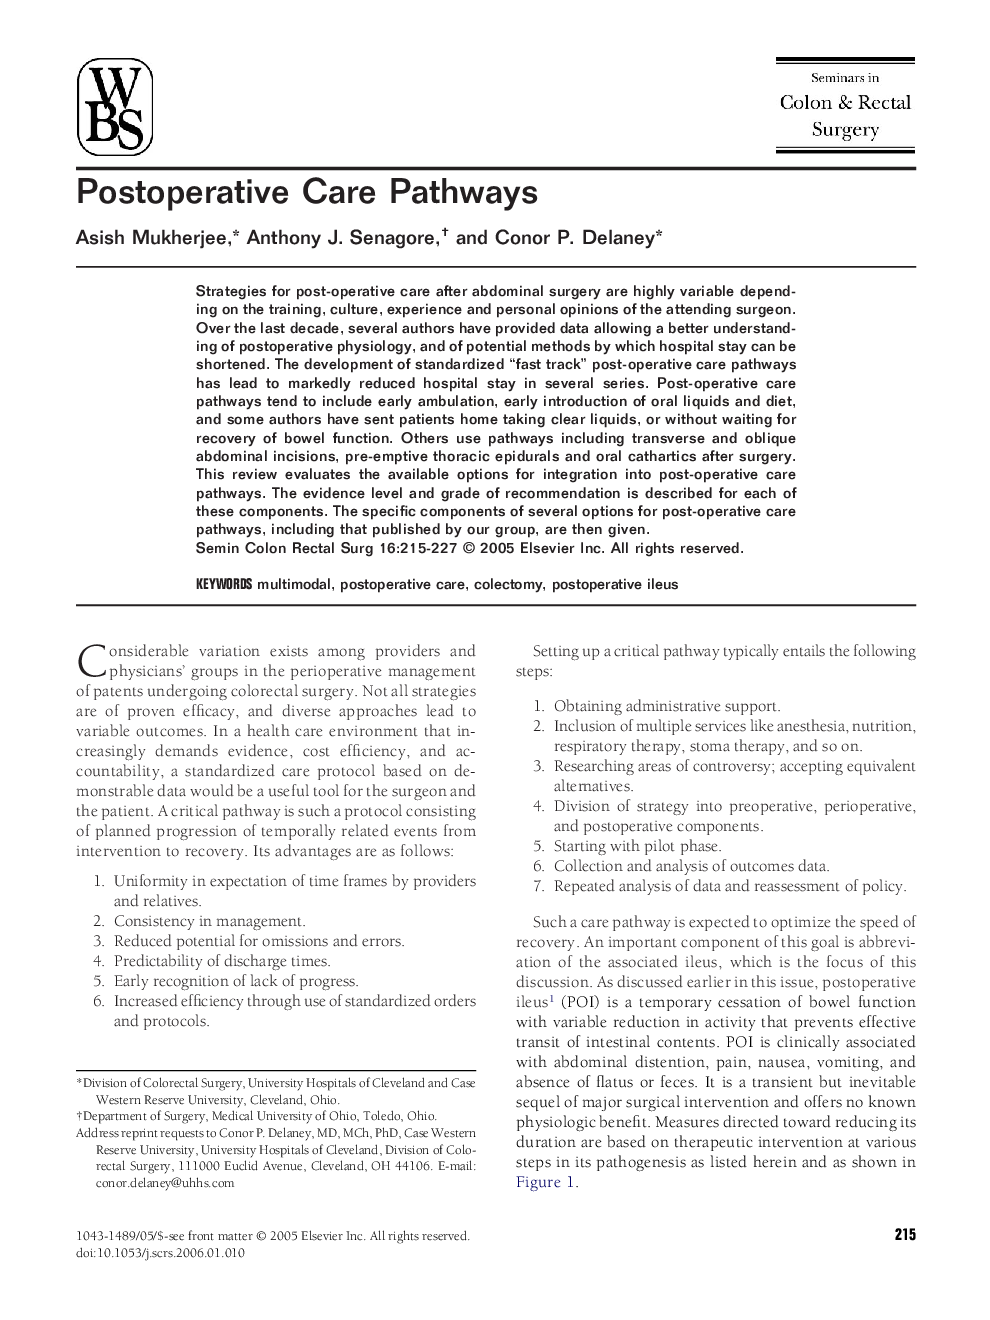 Postoperative Care Pathways